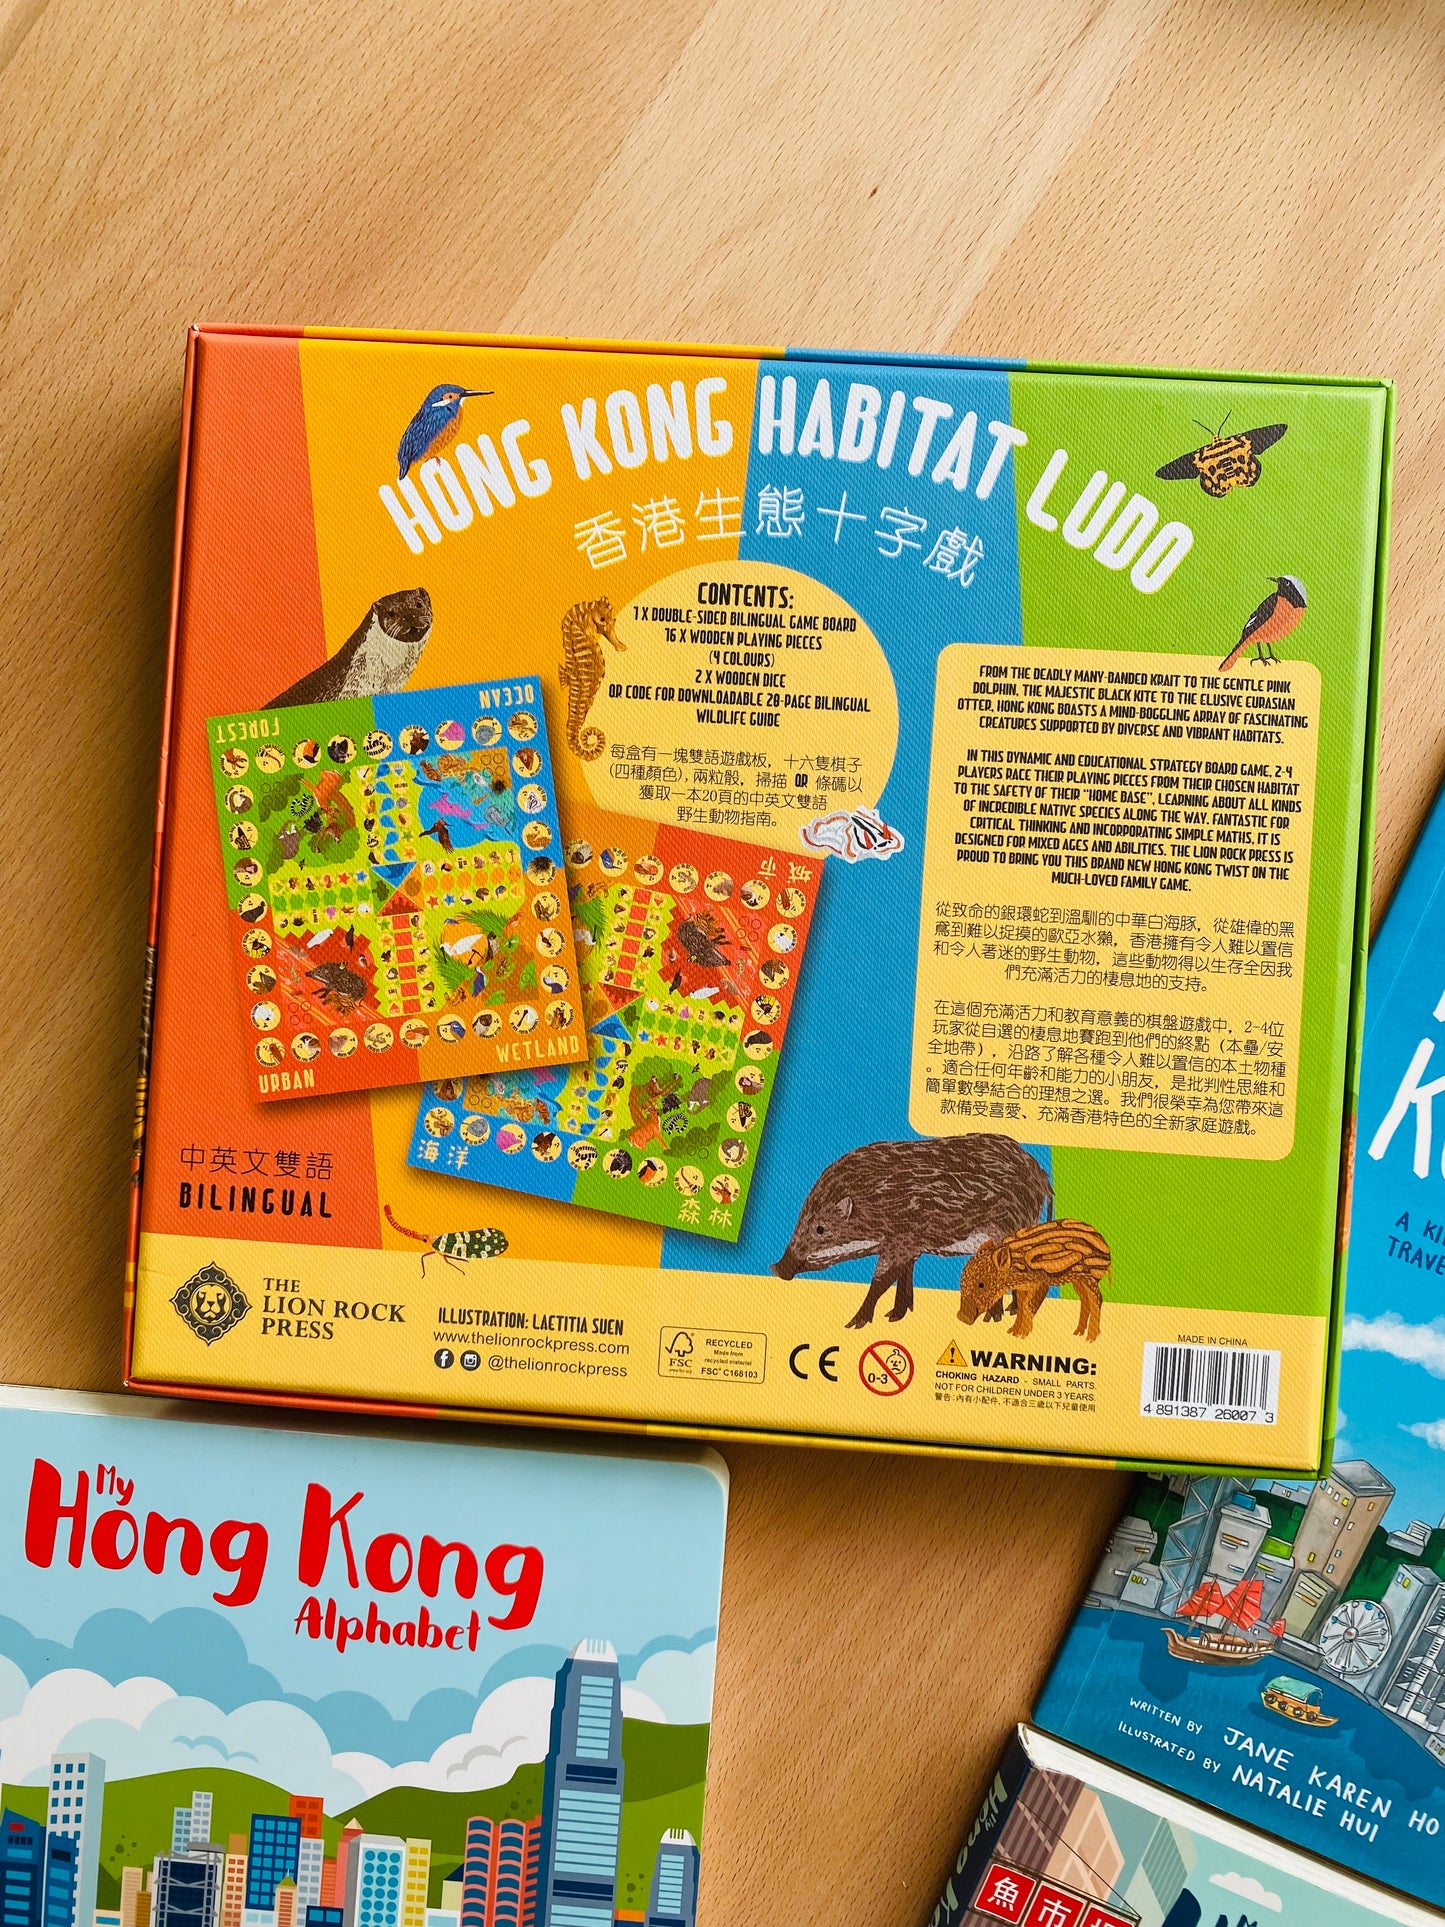 Hong Kong Habitat Ludo board game (Bilingual)